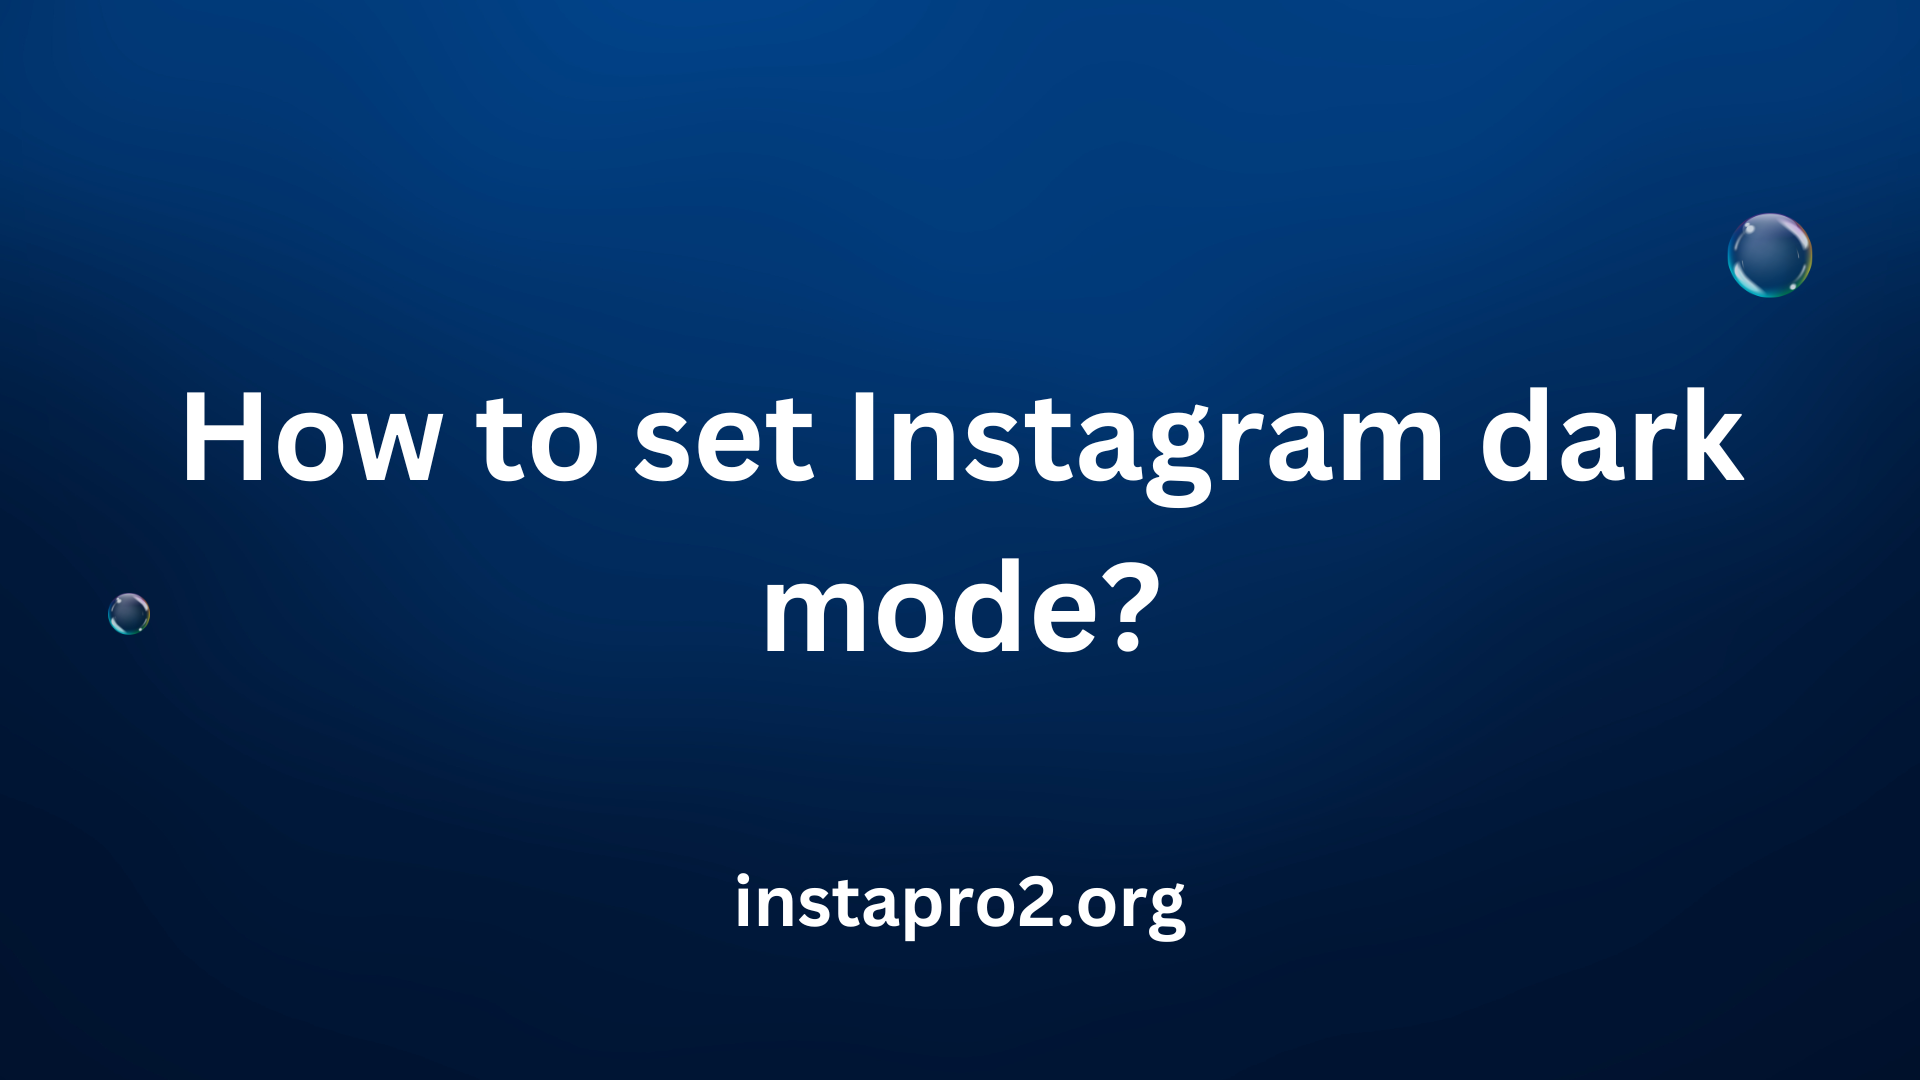 How to set Instagram dark mode?